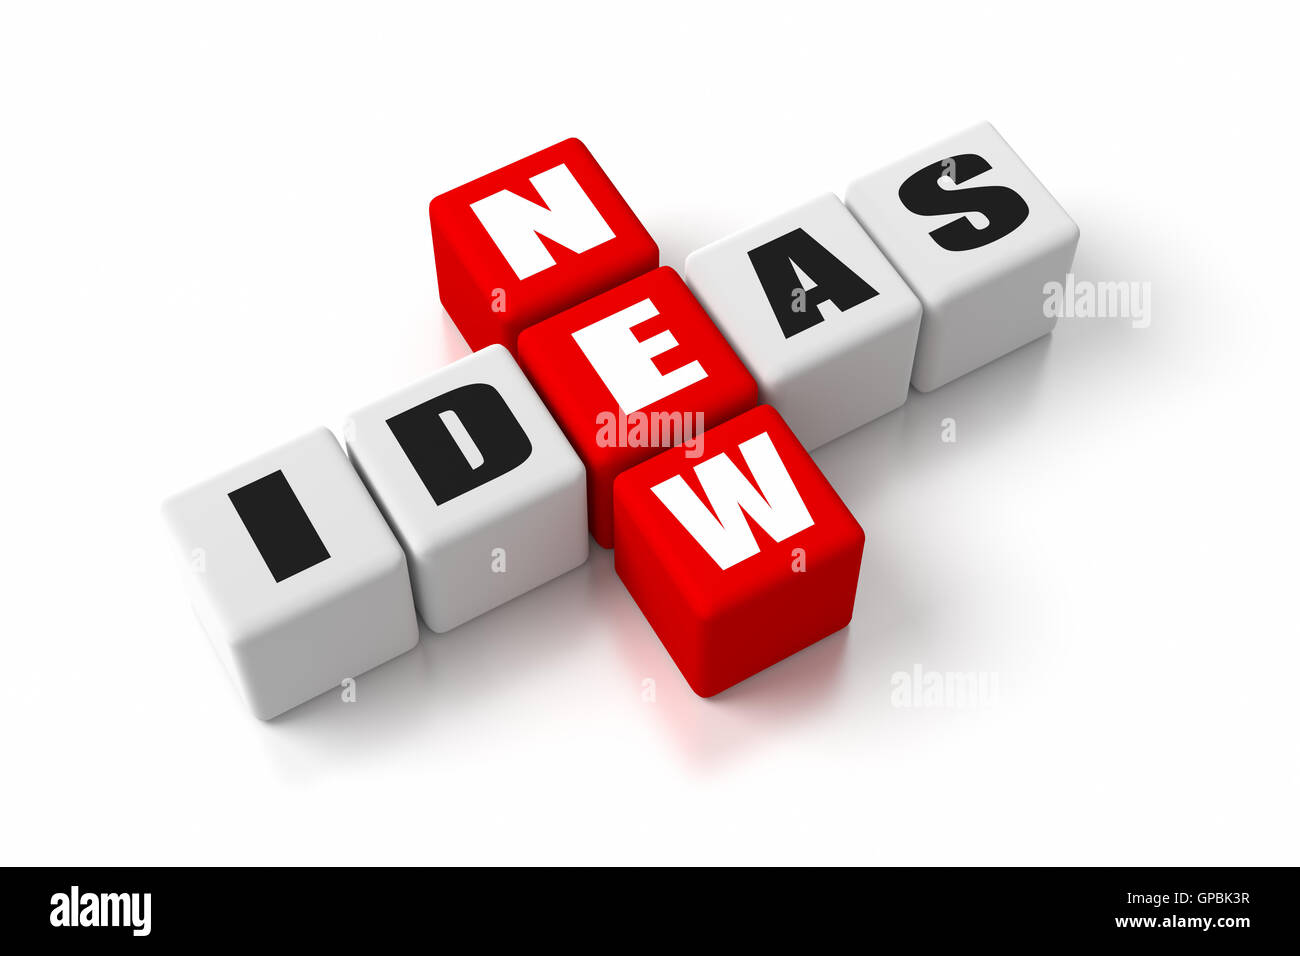 New Ideas Stock Photo